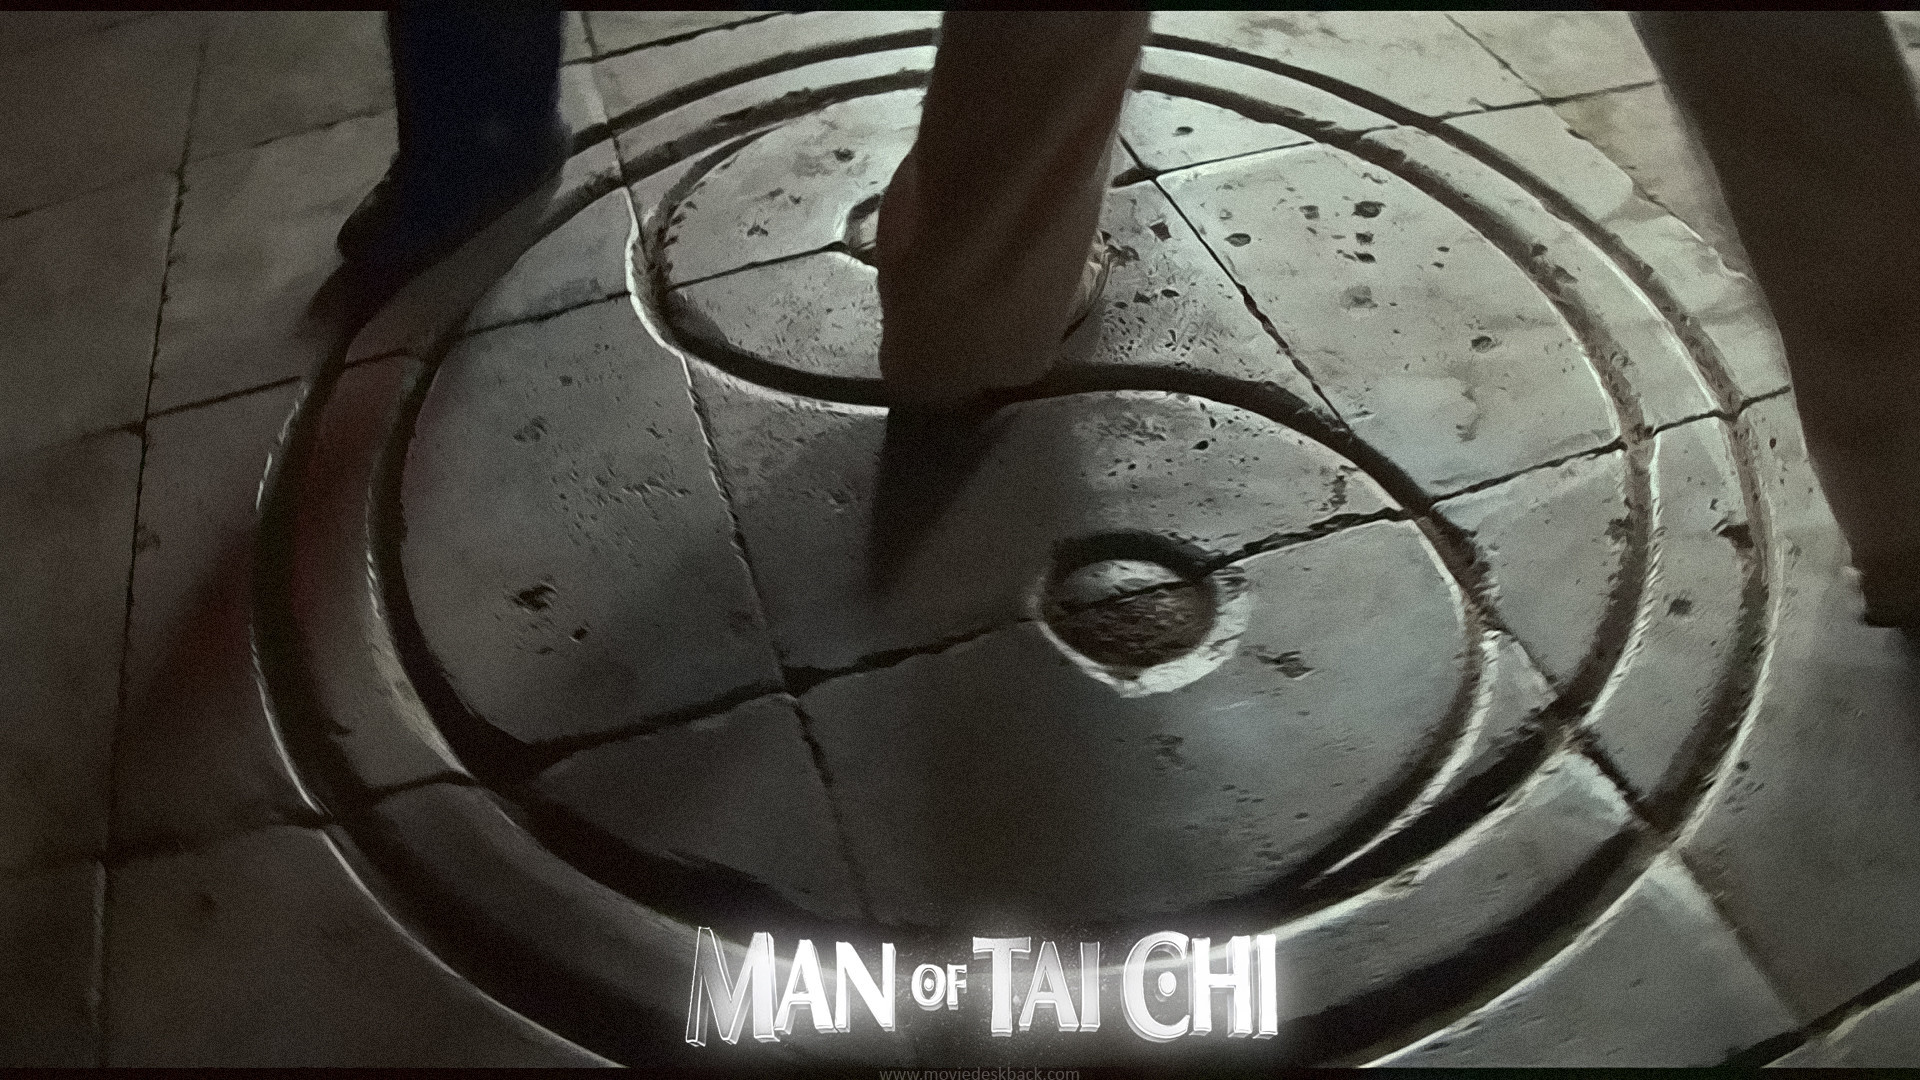 1920x1080  Man of Tai Chi Wallpaper - Original size, download now.